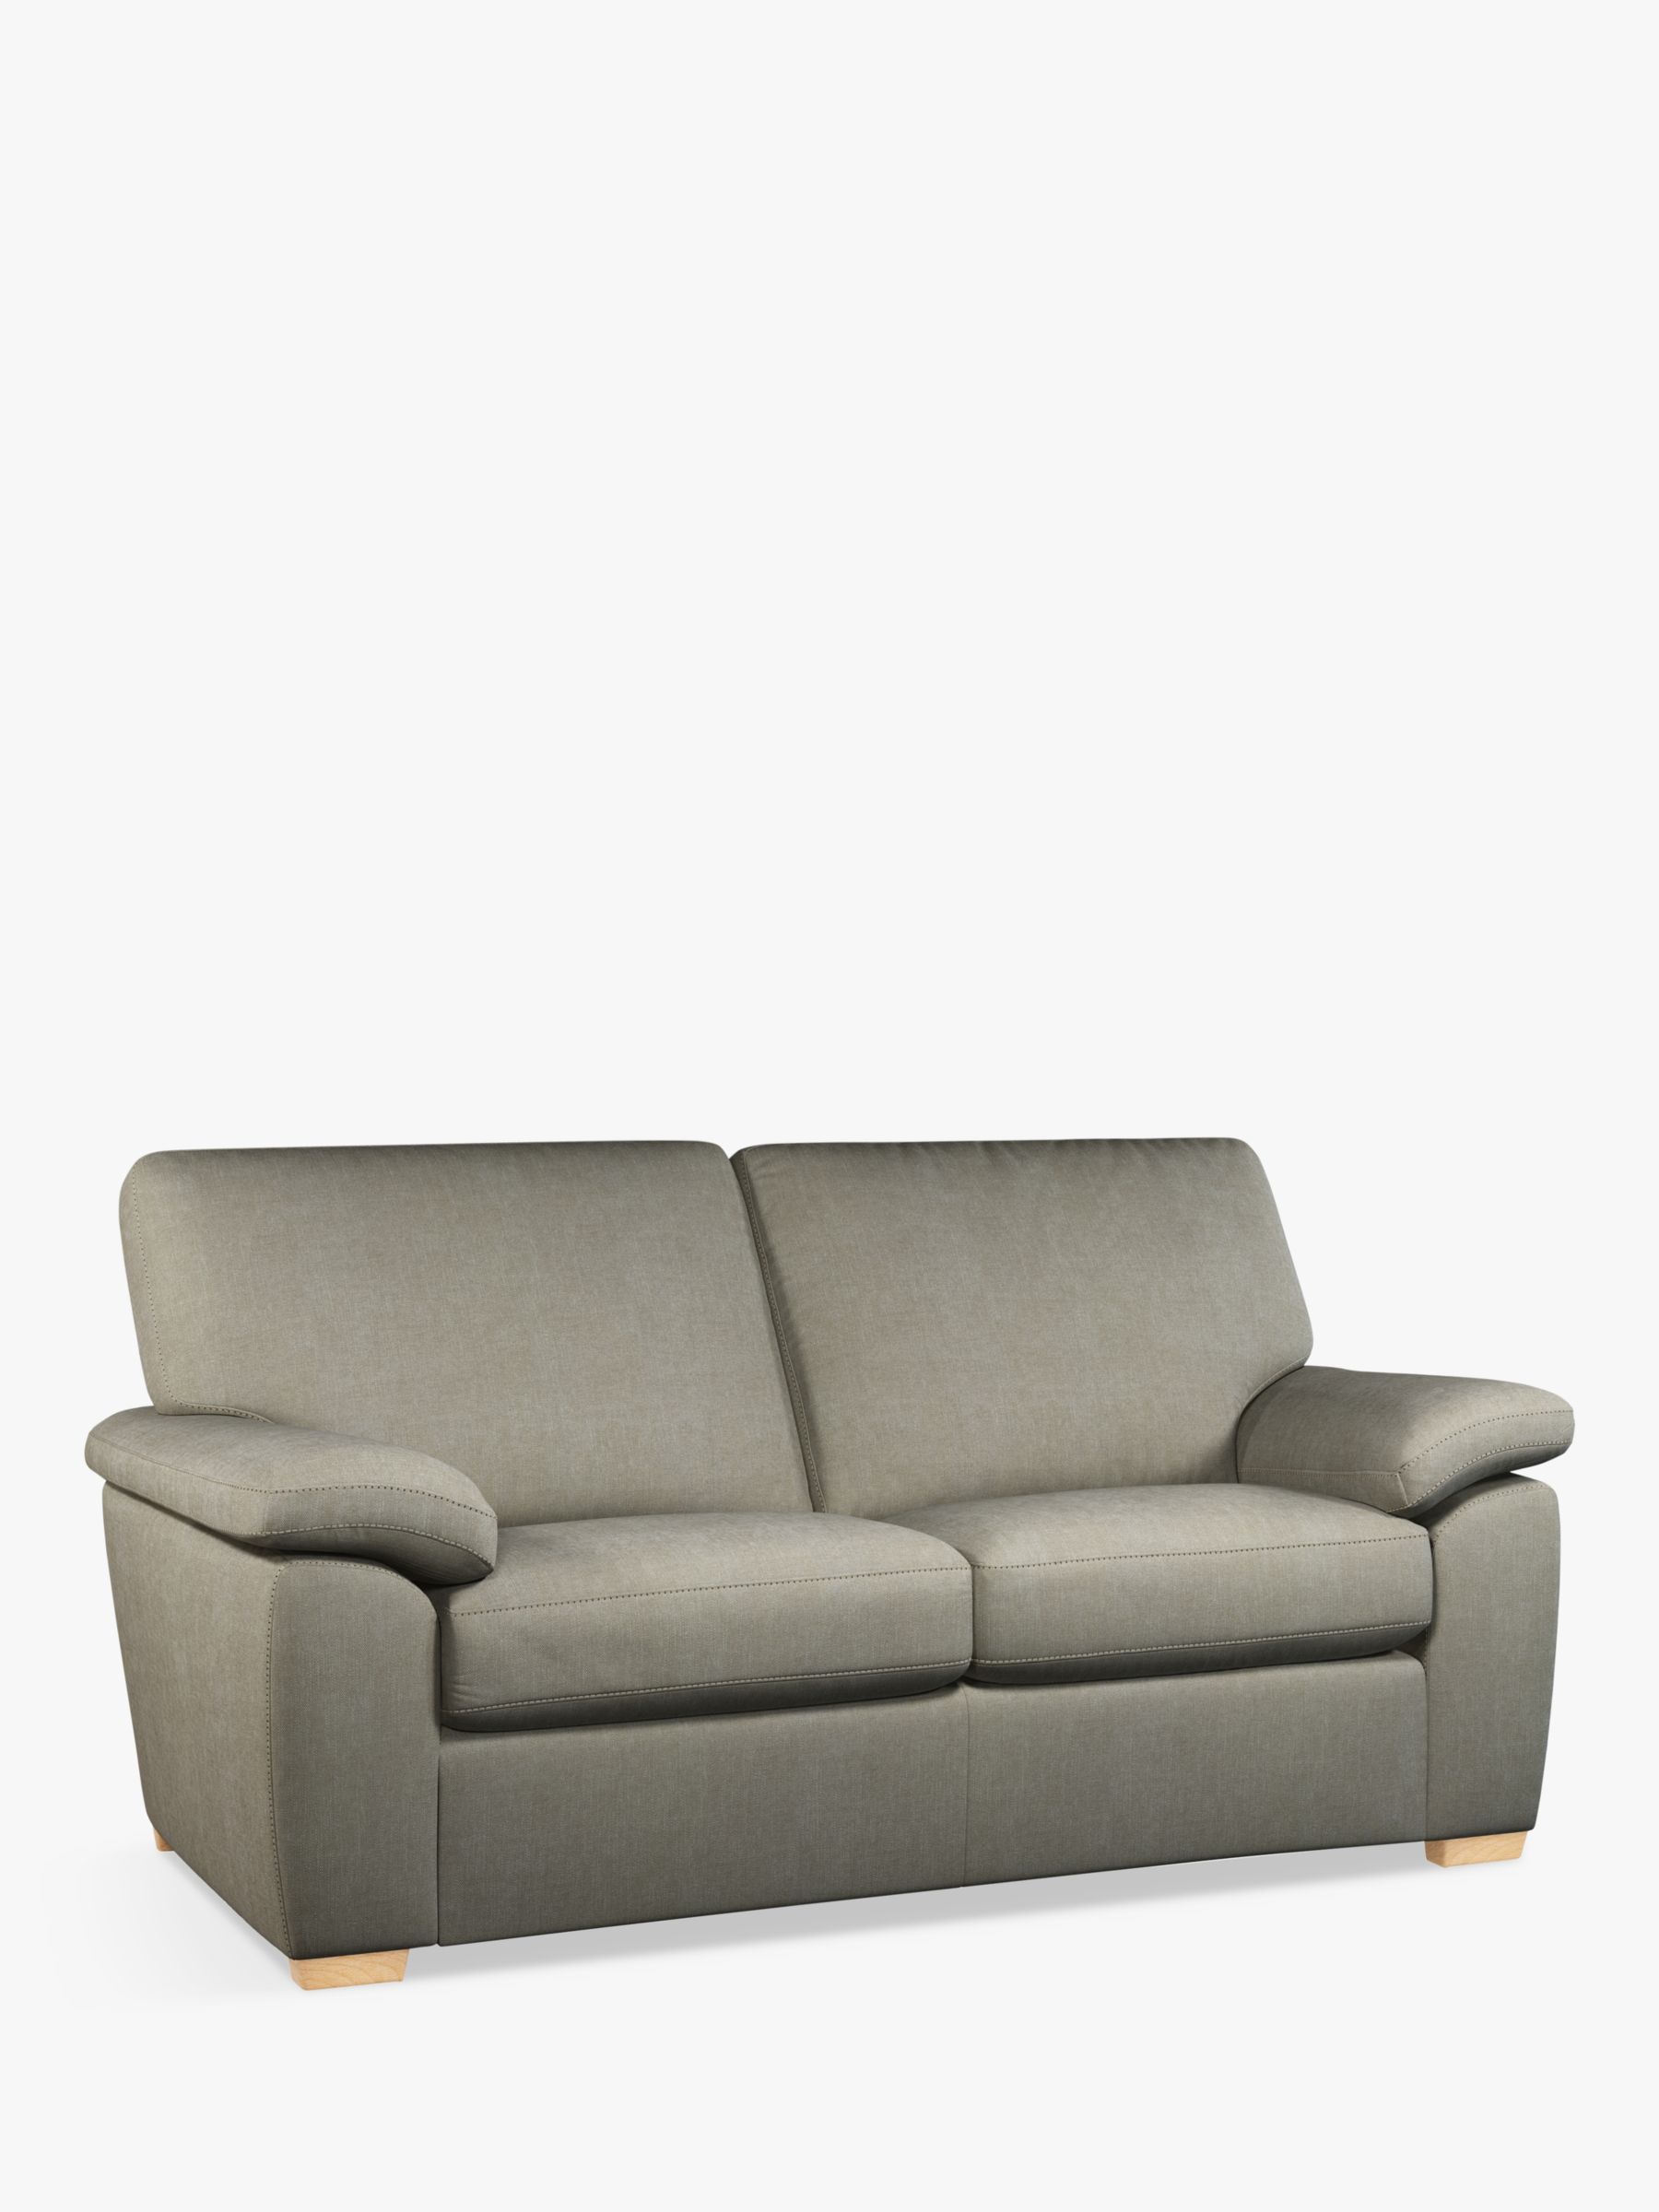 Photo of John lewis camden medium 2 seater sofa bed light leg soft touch chenille grey